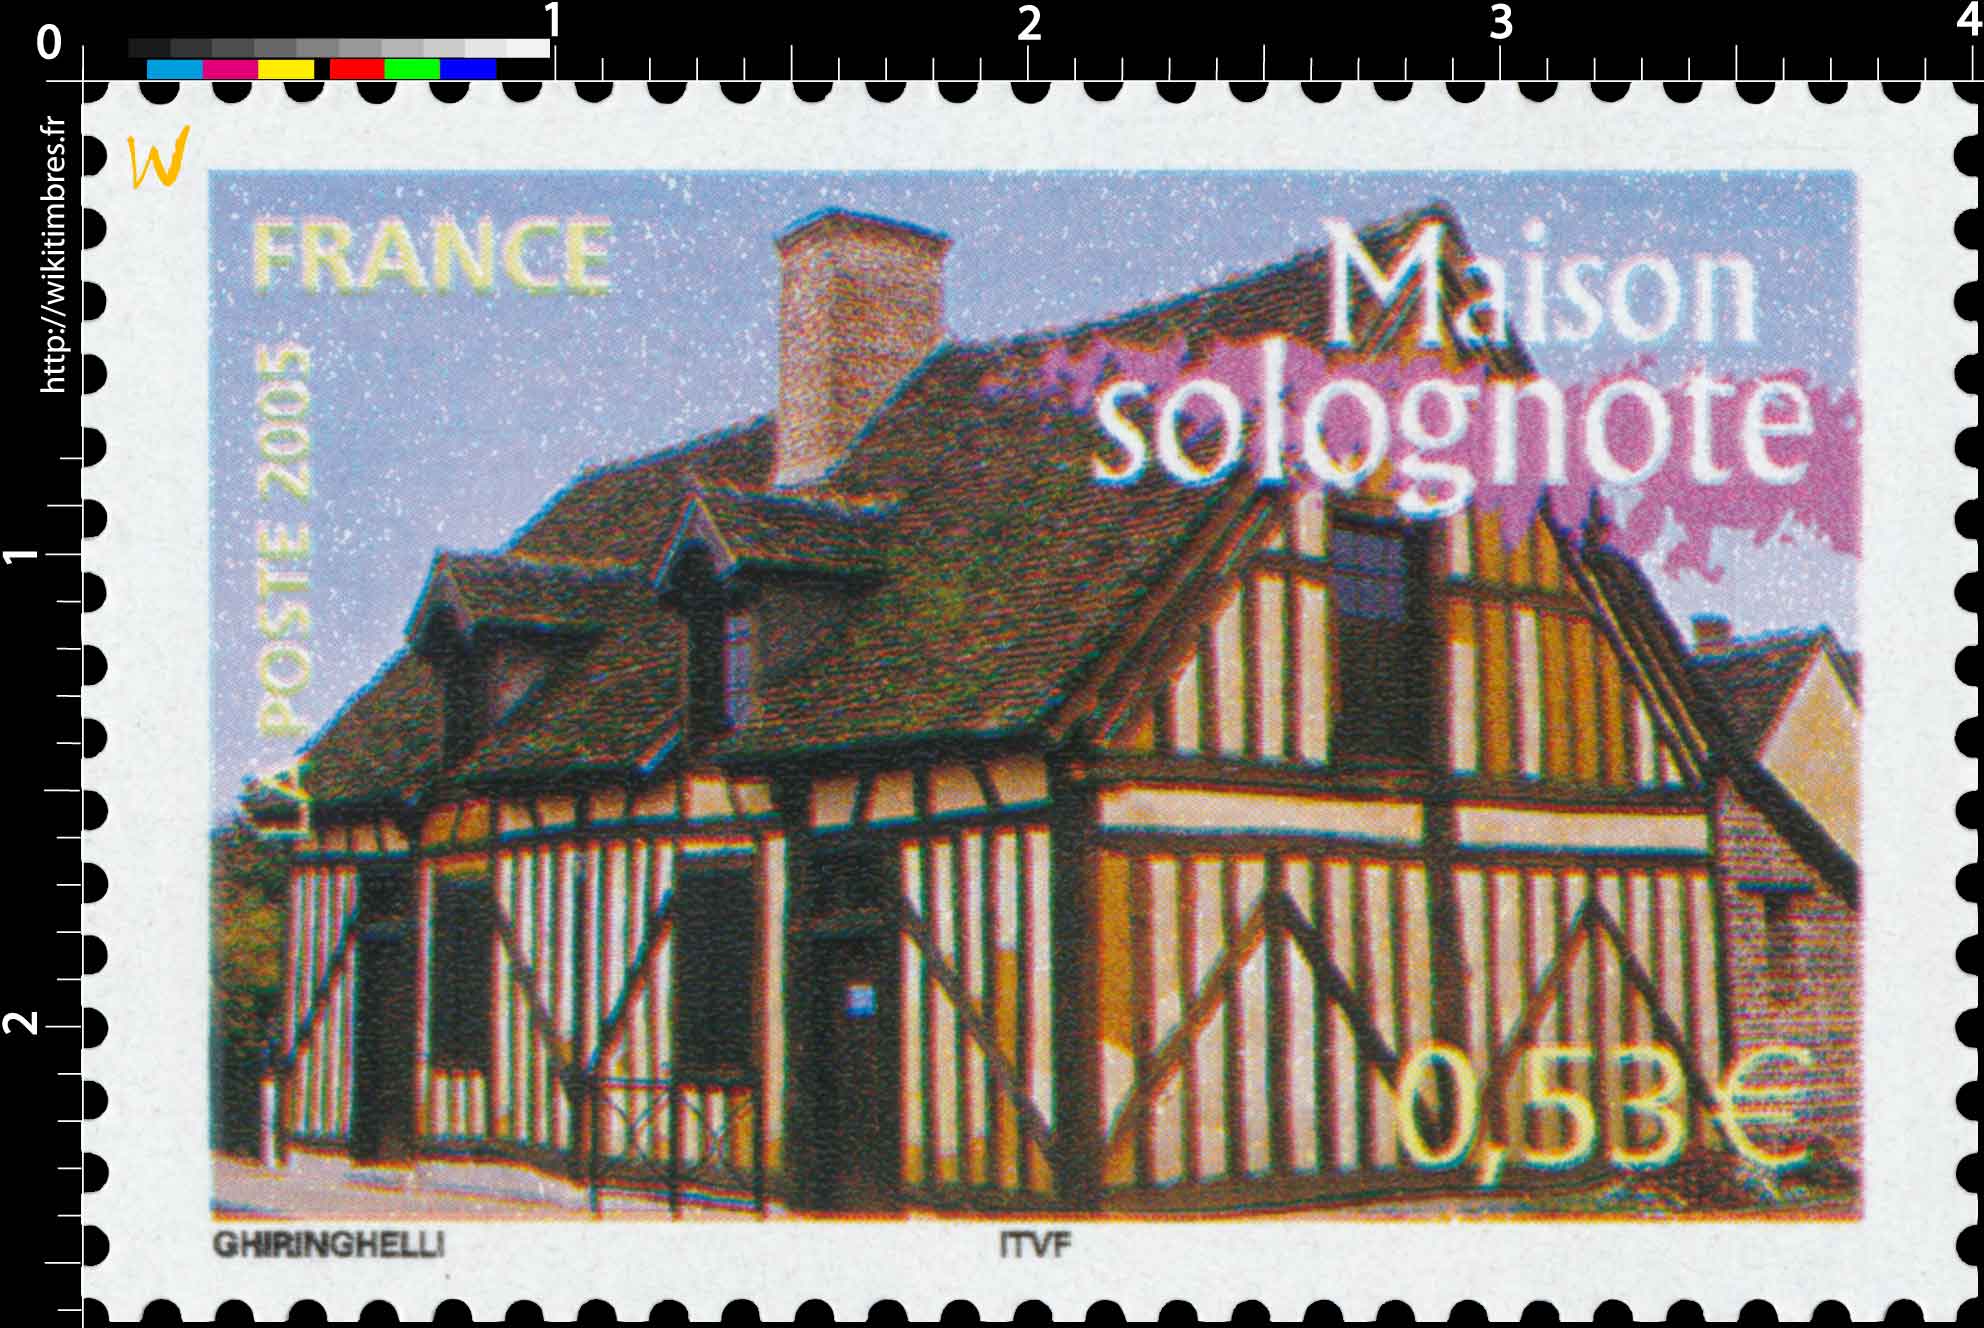 2005 Maison solognote